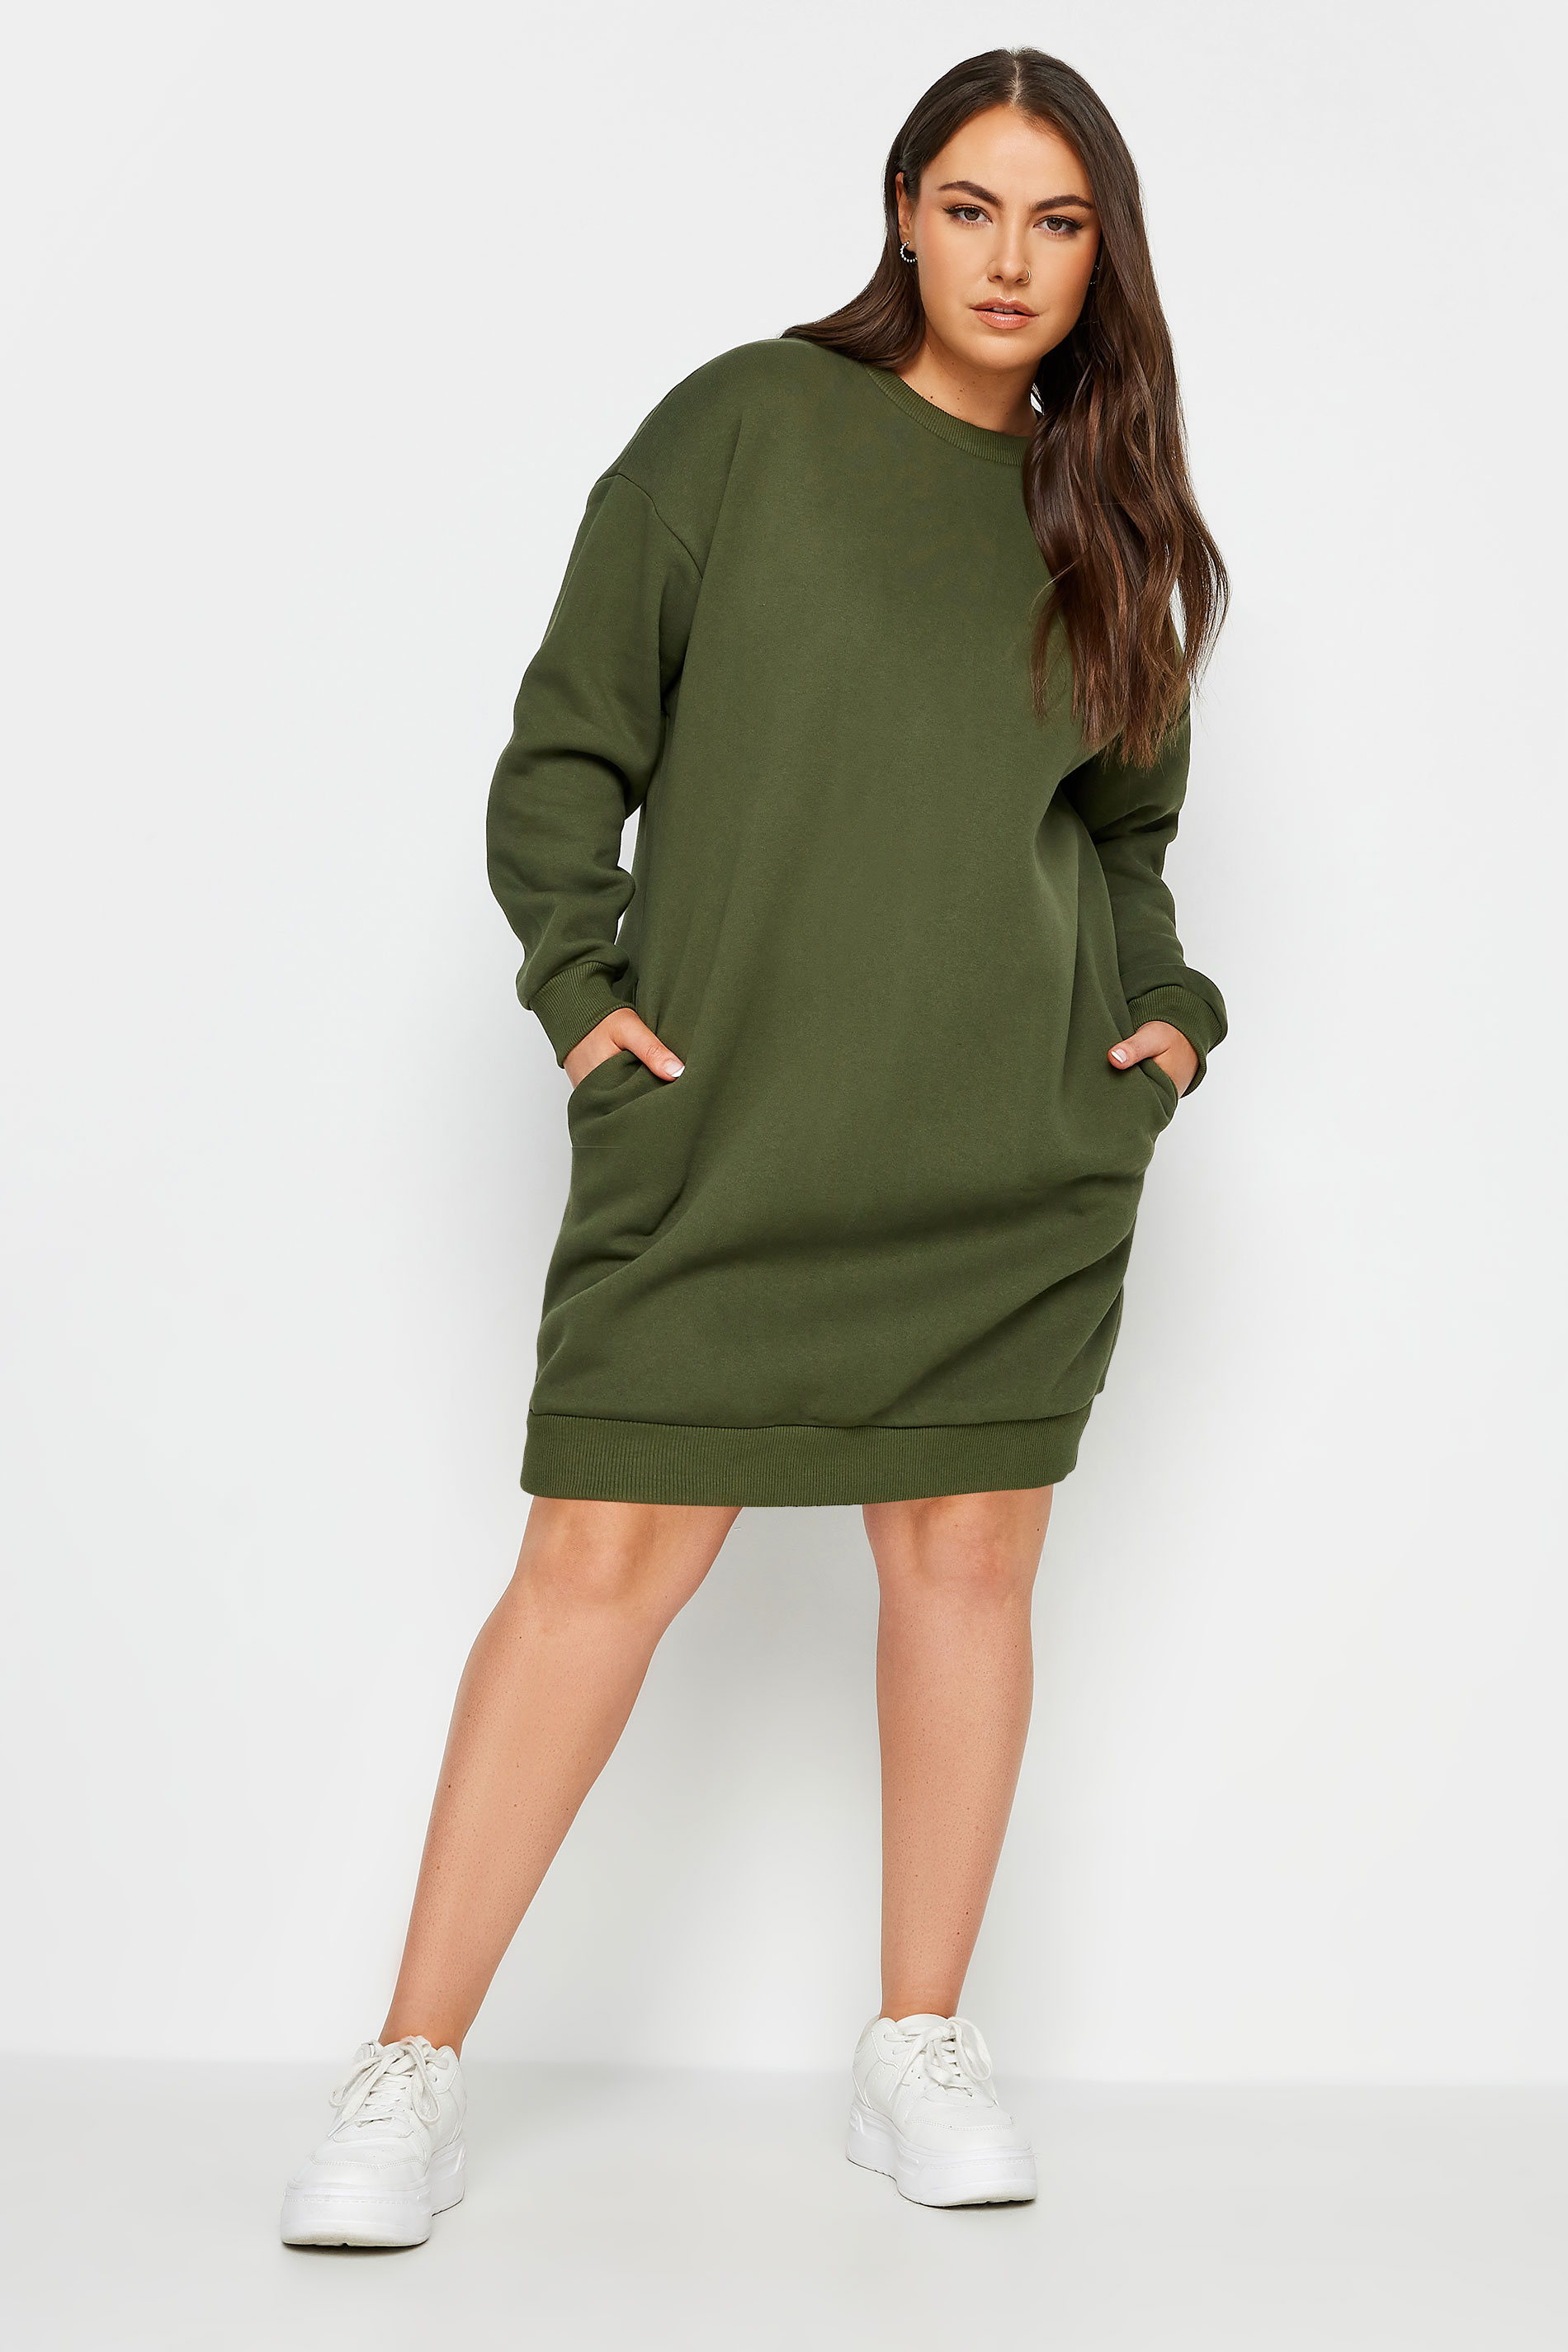 YOURS Plus Size Khaki Green Sweatshirt Dress | Yours Clothing 2